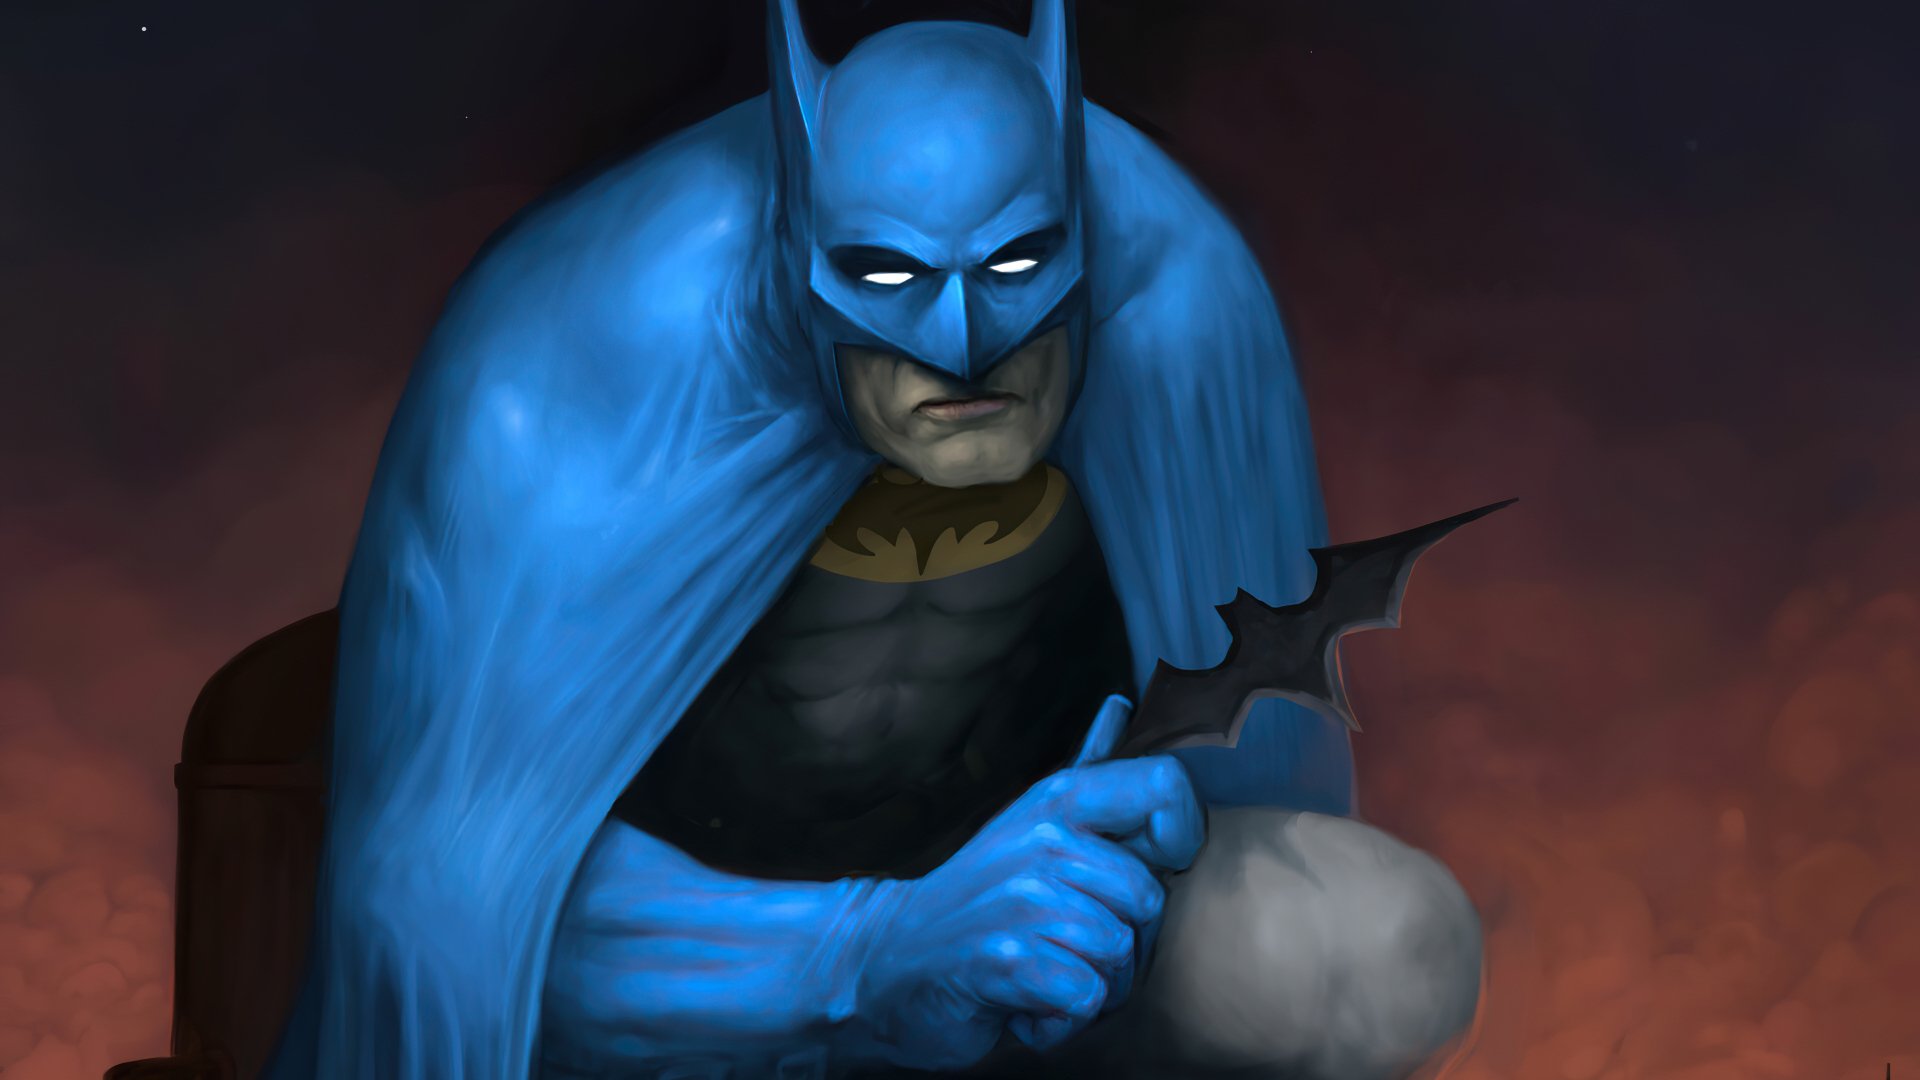 batman wallpaper by Jsiqueira - Download on ZEDGE™